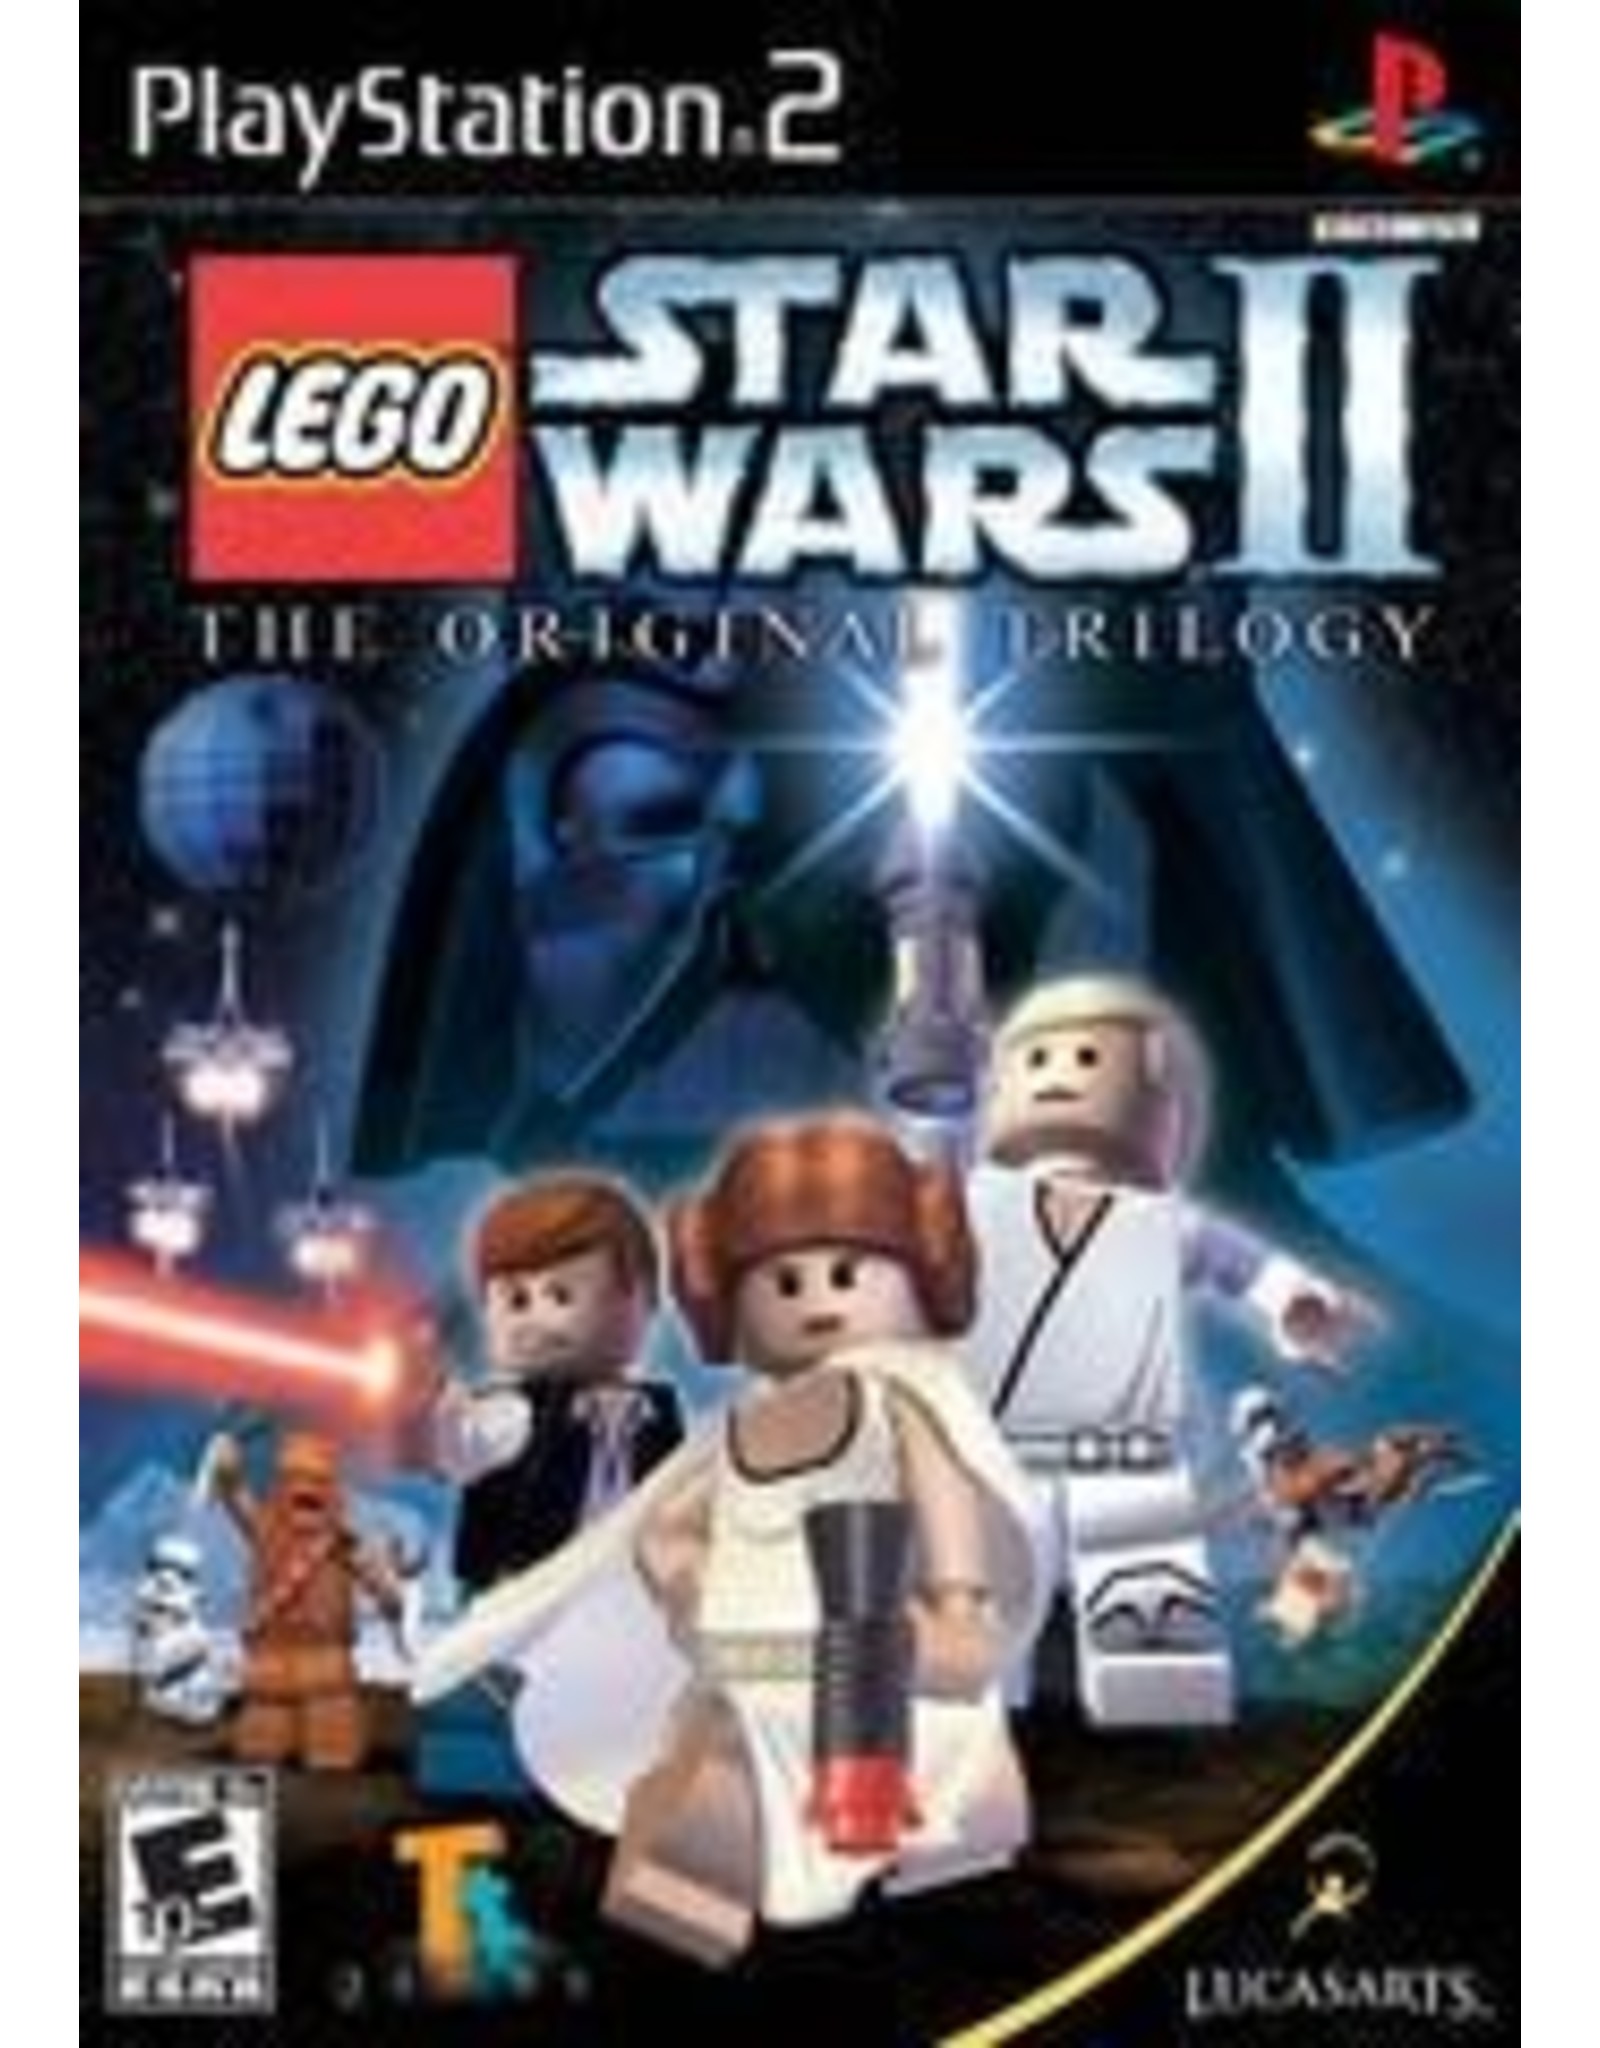 Playstation 2 LEGO Star Wars II Original Trilogy (No Manual)